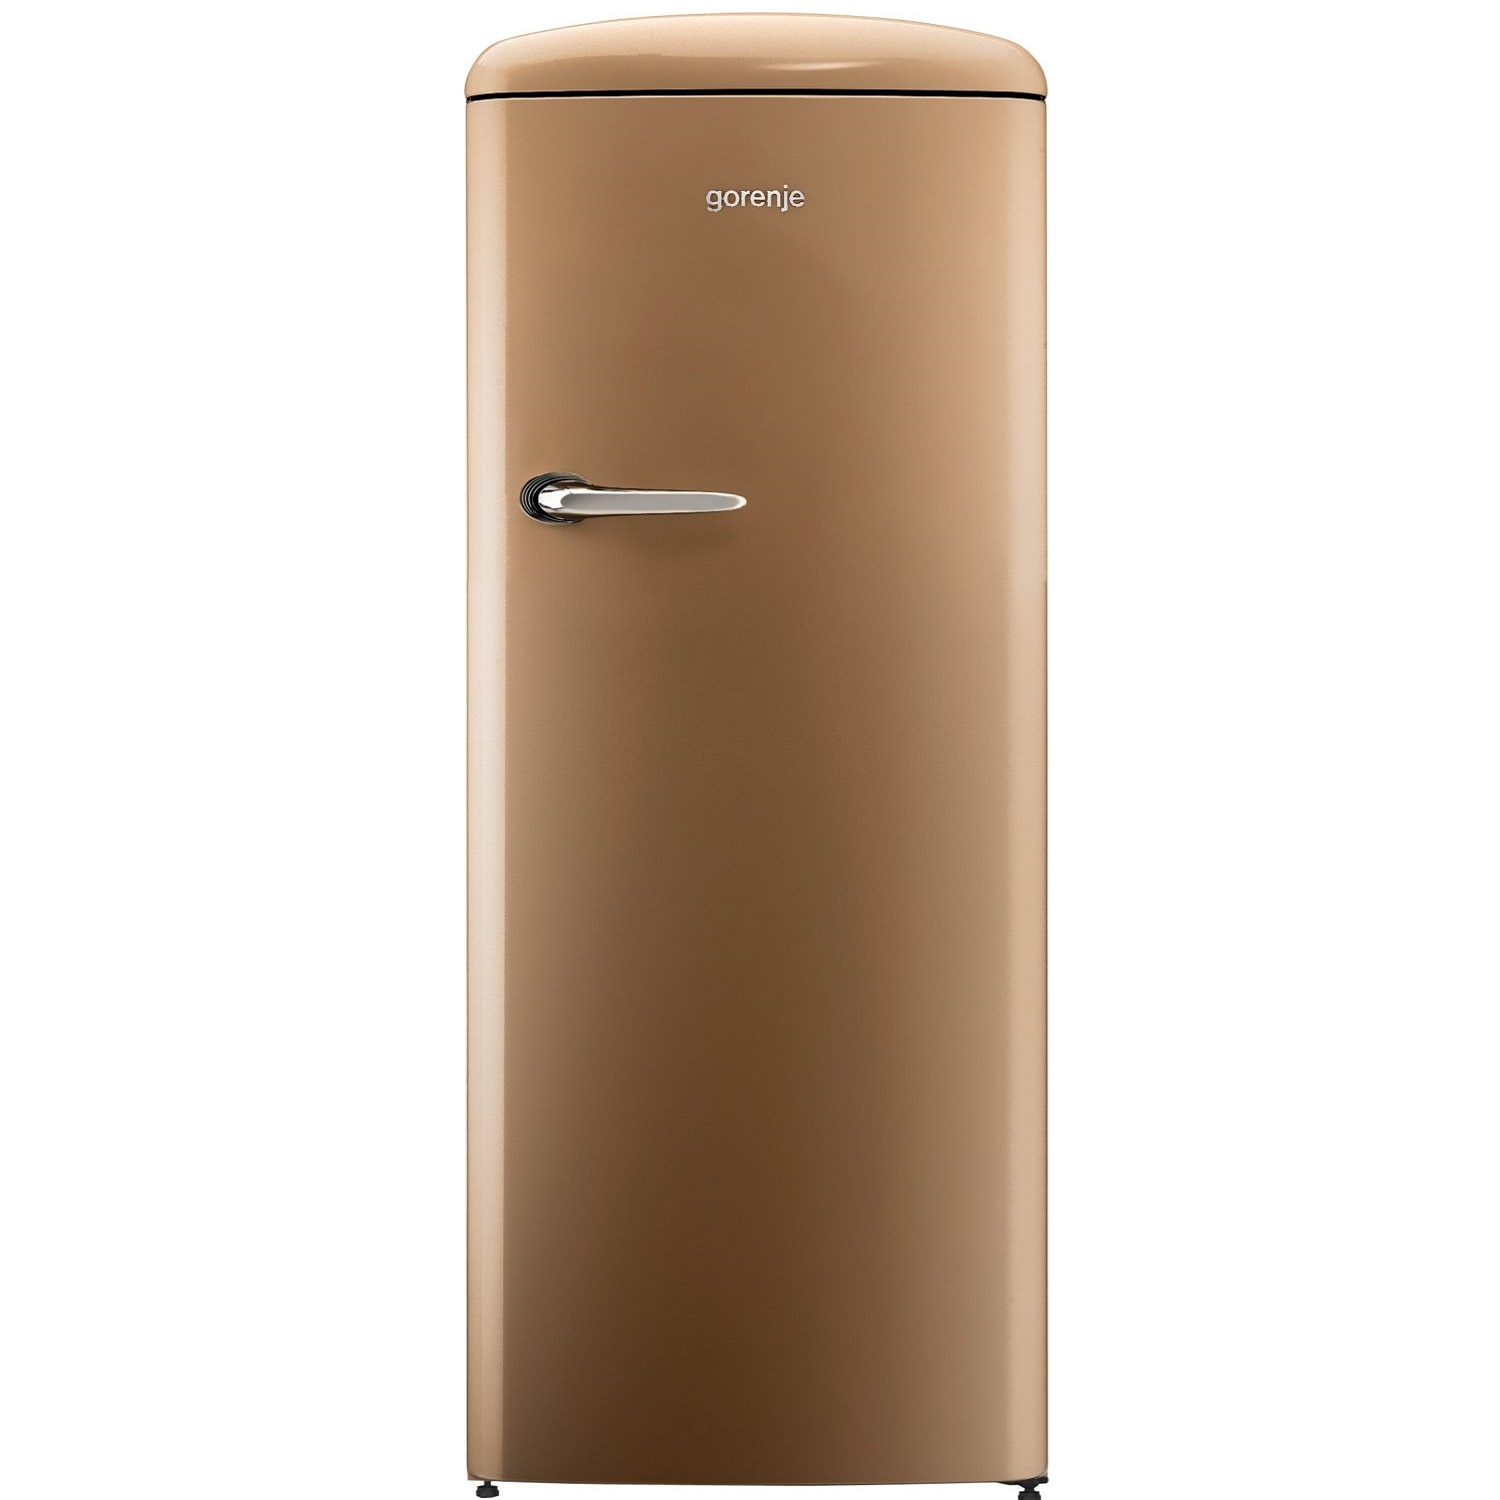 Хладилник Gorenje ORB152CO с обем от 254 л.